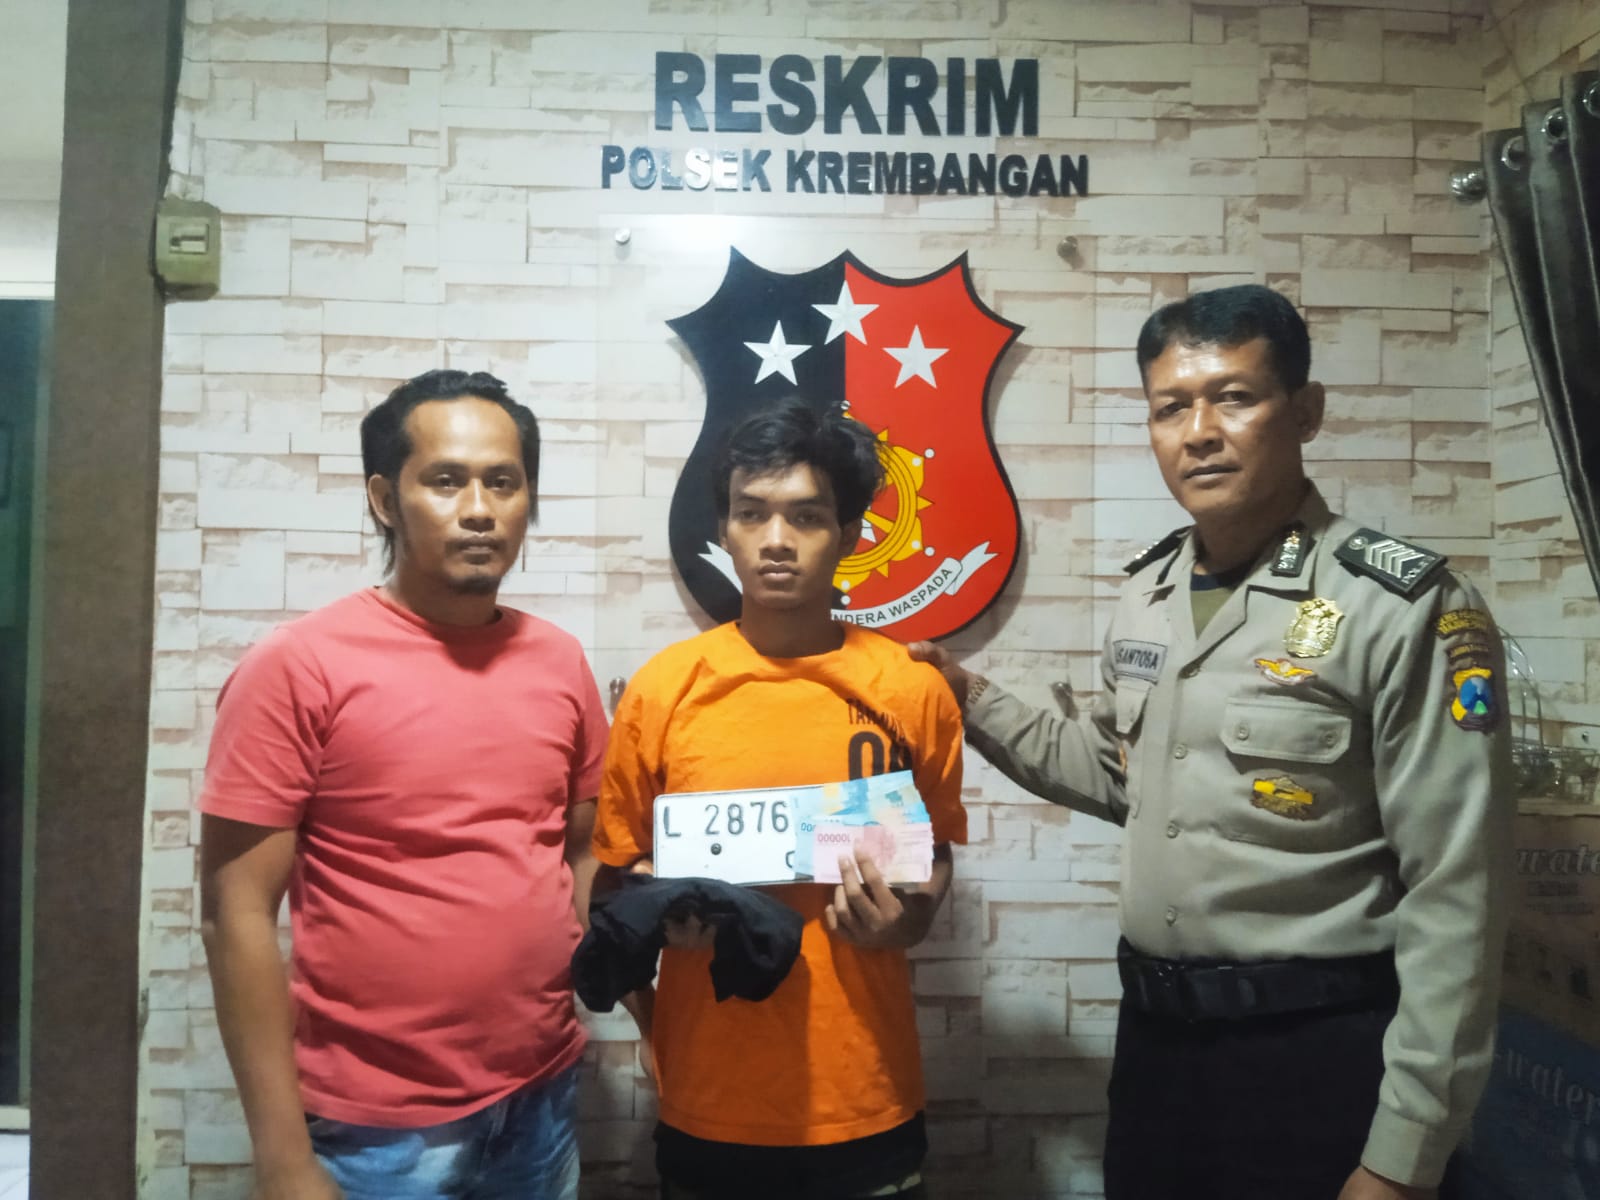 Seorang pelaku pencurian kendaraan bermotor (curanmor) 5 TKP di wilayah Jalan Kalianak Timur Kota Surabaya ditangkap polisi.